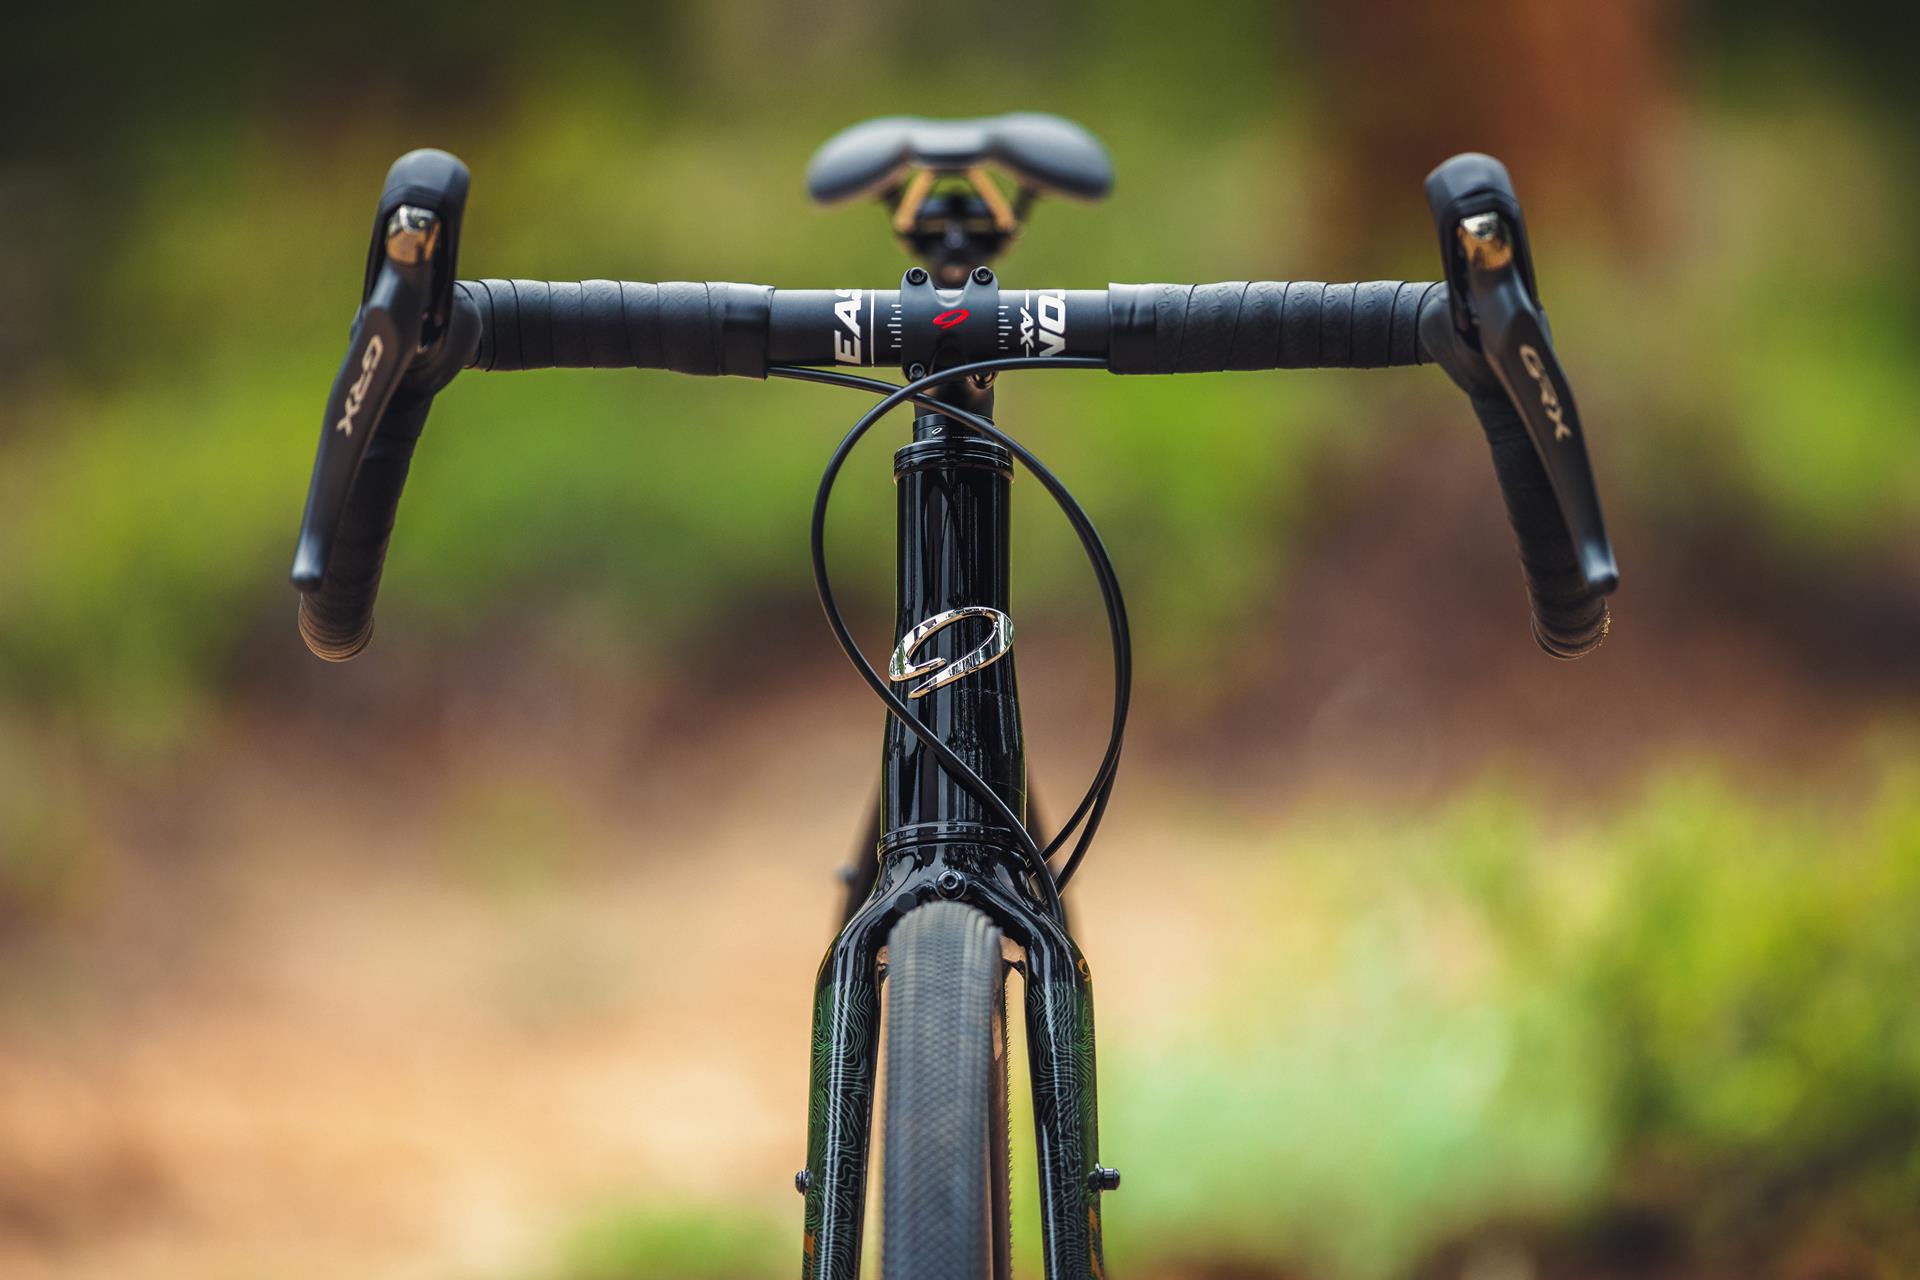 Niner RLT 2-star велосипед, черная бронза, 53